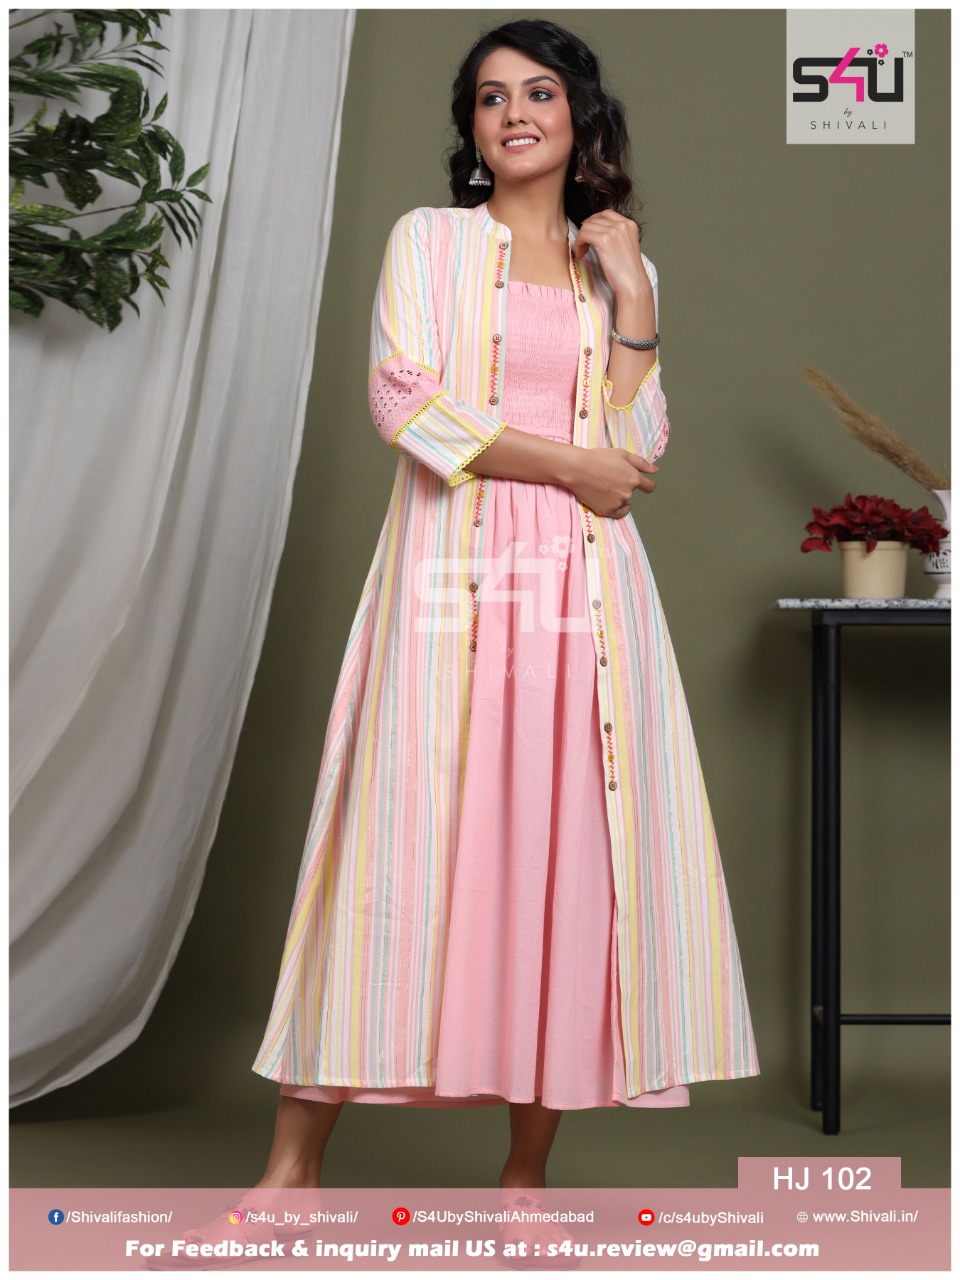 S4u by shivali retro 2019 summer collection stylish kurti catalog surat  best price buy online